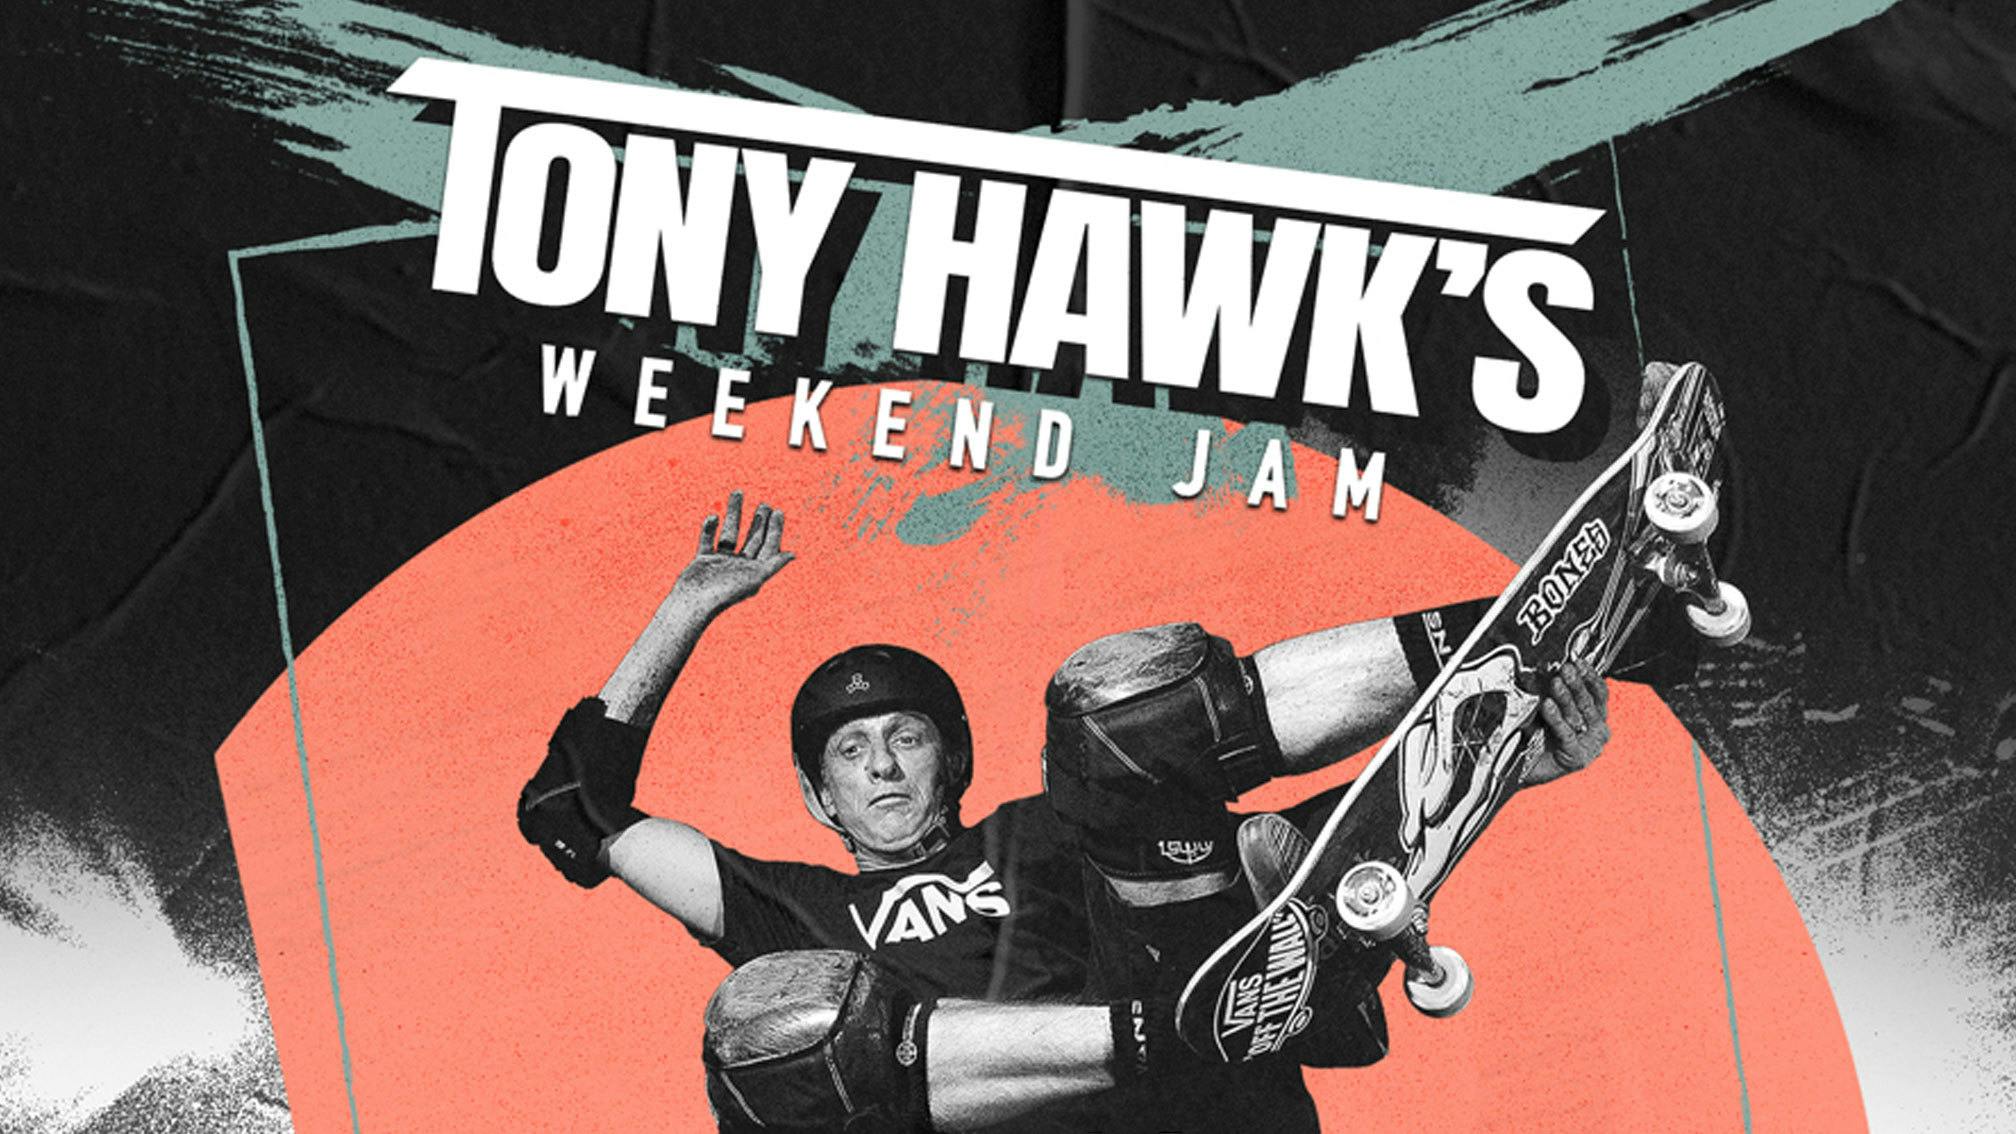 Tony Hawk announces skateboarding and music fest, Weekend Jam